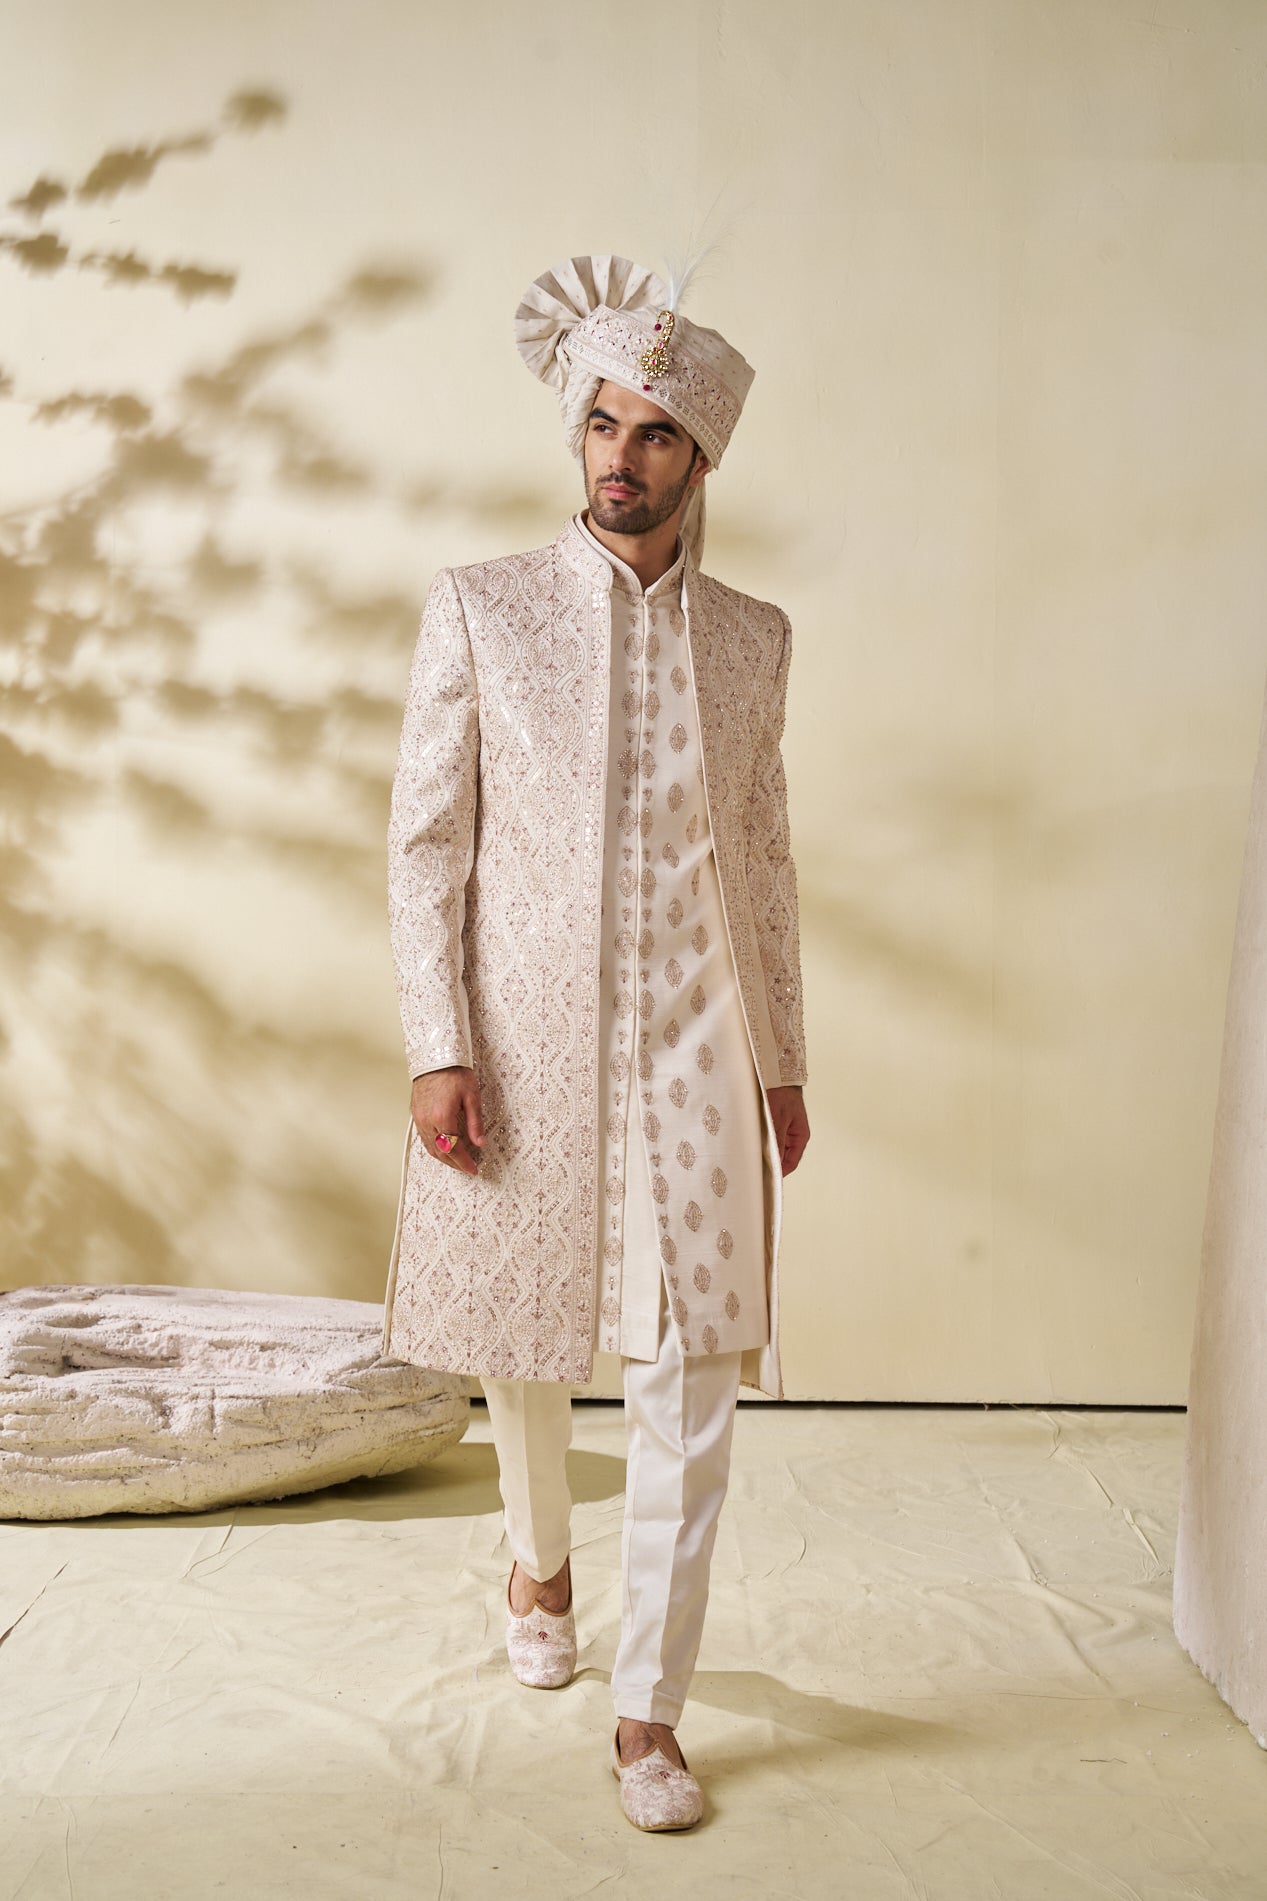 IndoWestern for Men - Bandhgala or Jodhpuri suits for Weddings